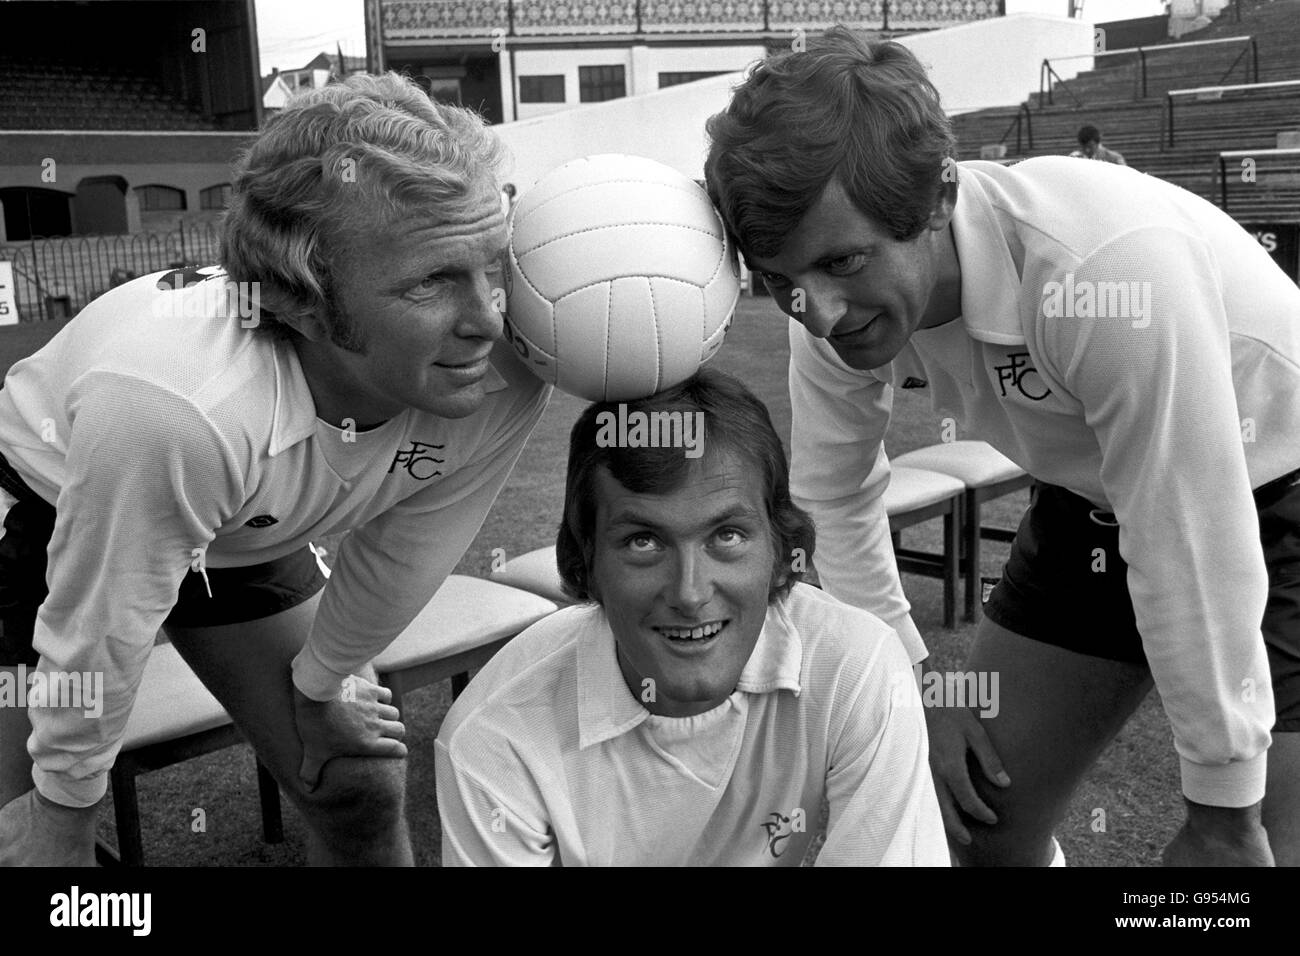 Fulhams Neuzugang Flemming Hanssen (c) mit seinen Teamkollegen Bobby Moore (l) und Alan Mullery (r) Stockfoto